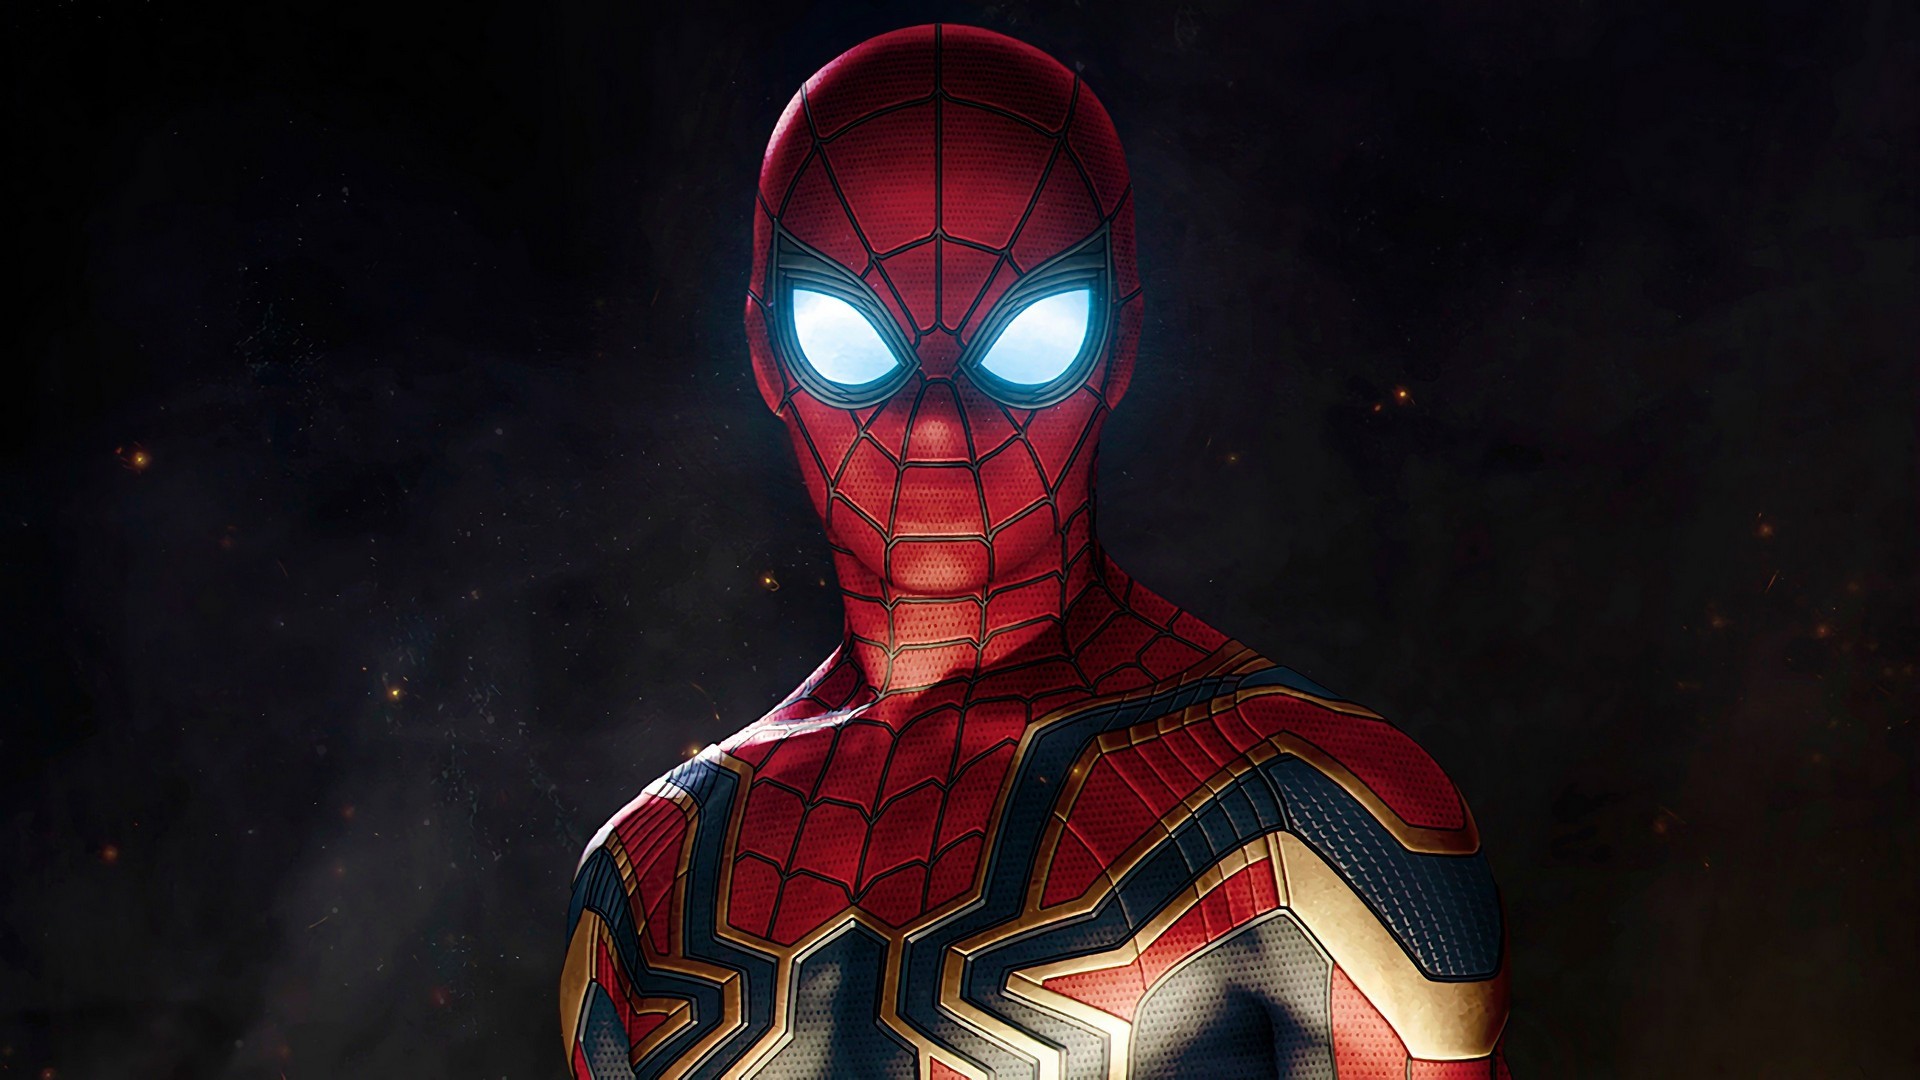 Spiderman-Avengers-Infinity-War-Wallpaper.jpg